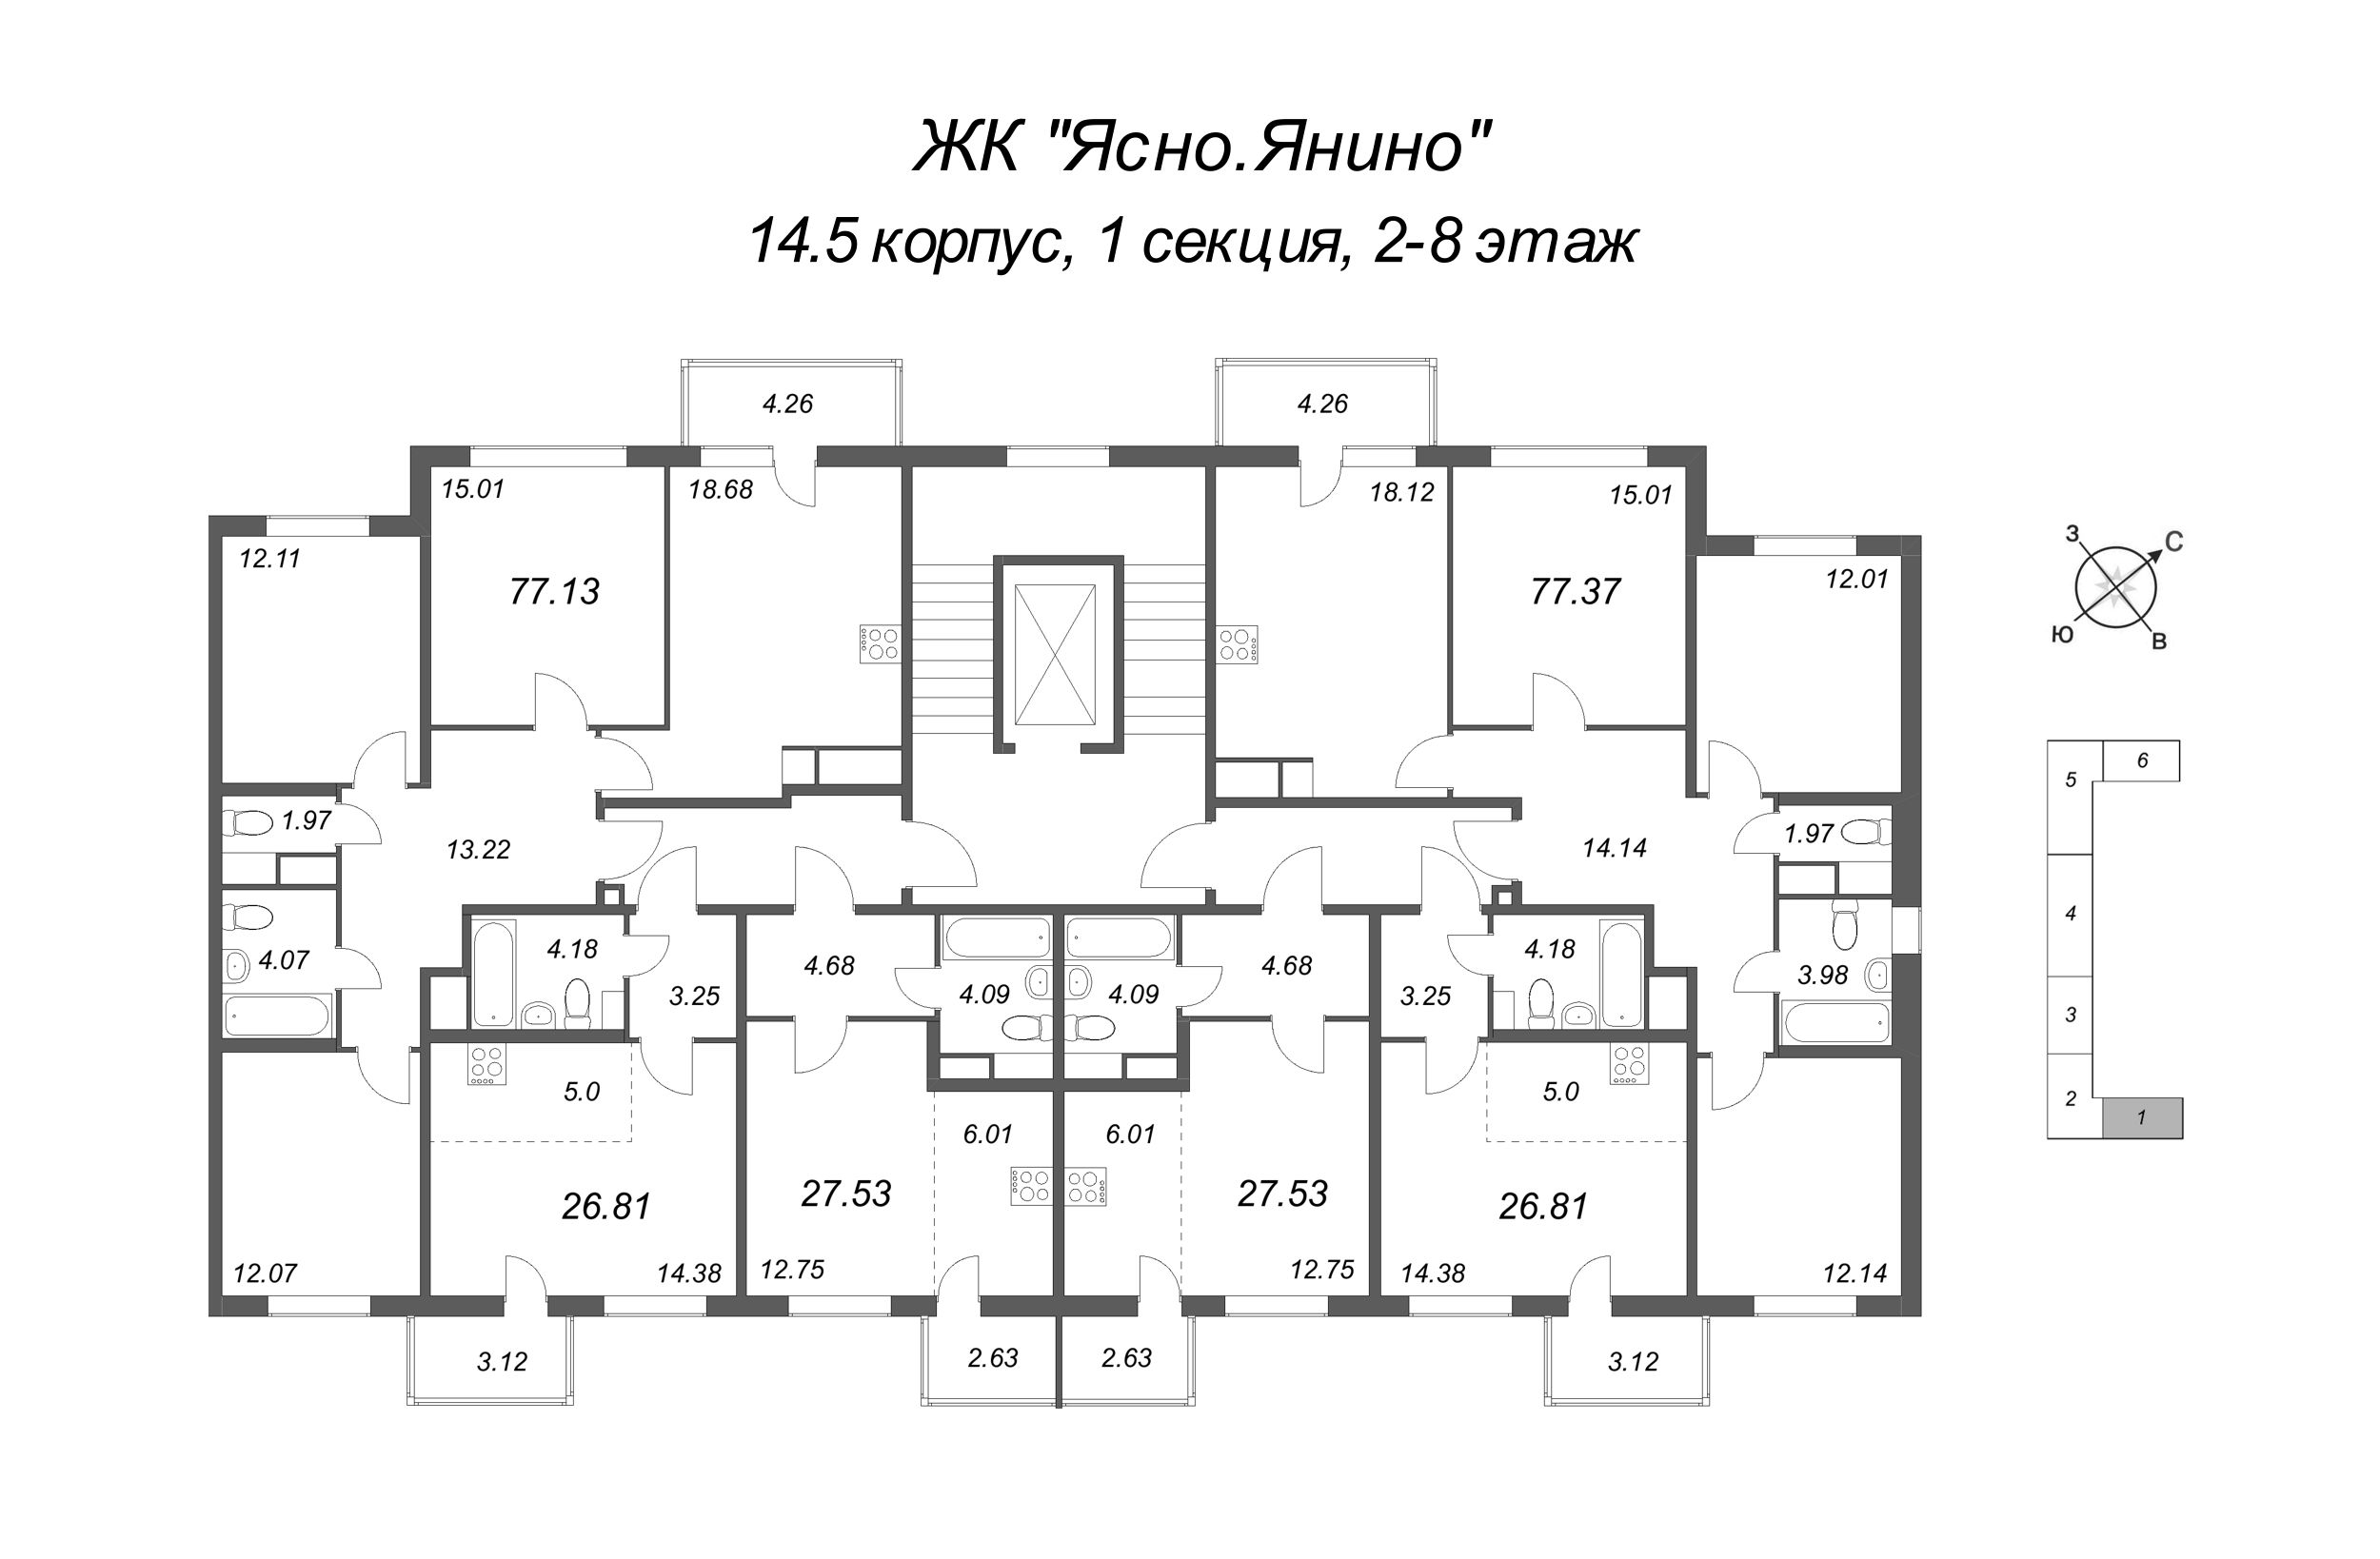 4-комнатная (Евро) квартира, 77.37 м² - планировка этажа